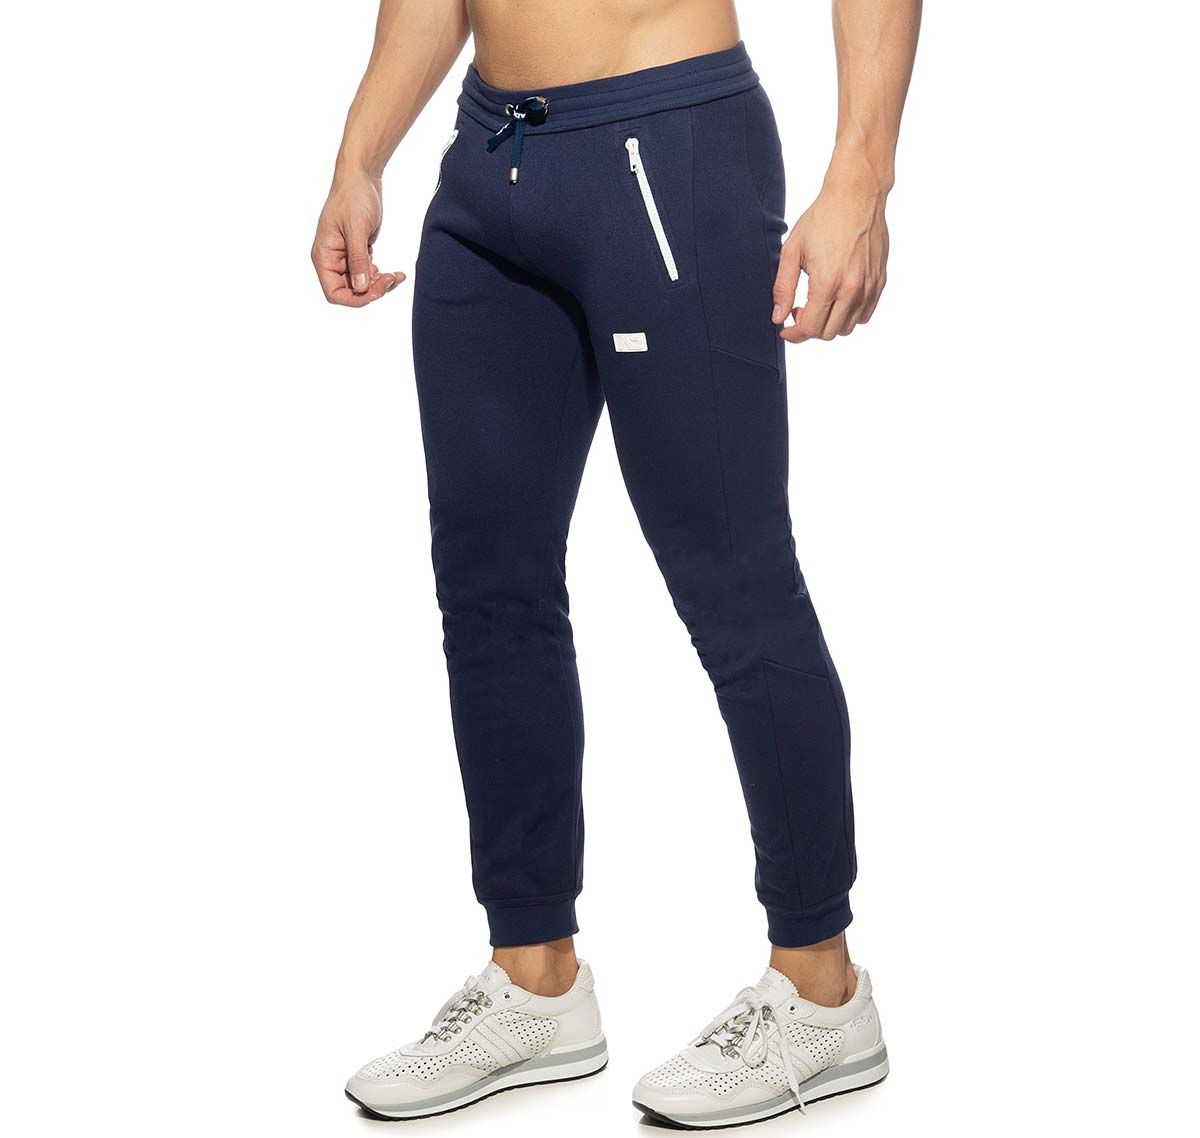 Addicted Pantaloni sportivi lunghi DOUBLE ZIP JOGGING PANTS AD1012, navy blu